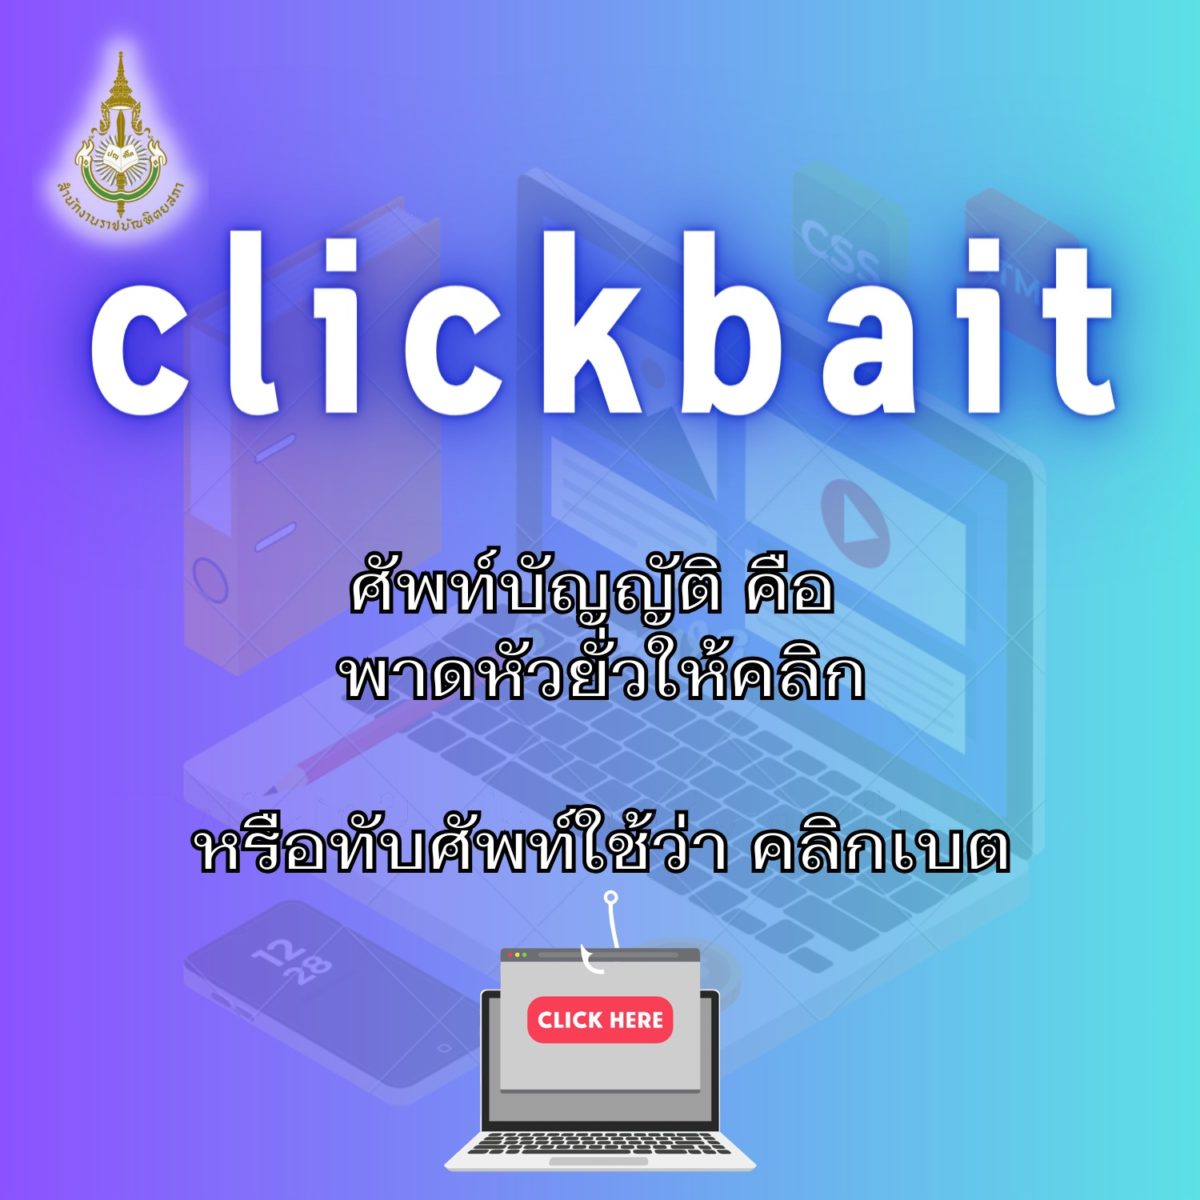 "Clickbait" ราชบัณฑิตฯ บัญญัติภาษาไทยว่า "พาดหัวยั่วให้คลิก"